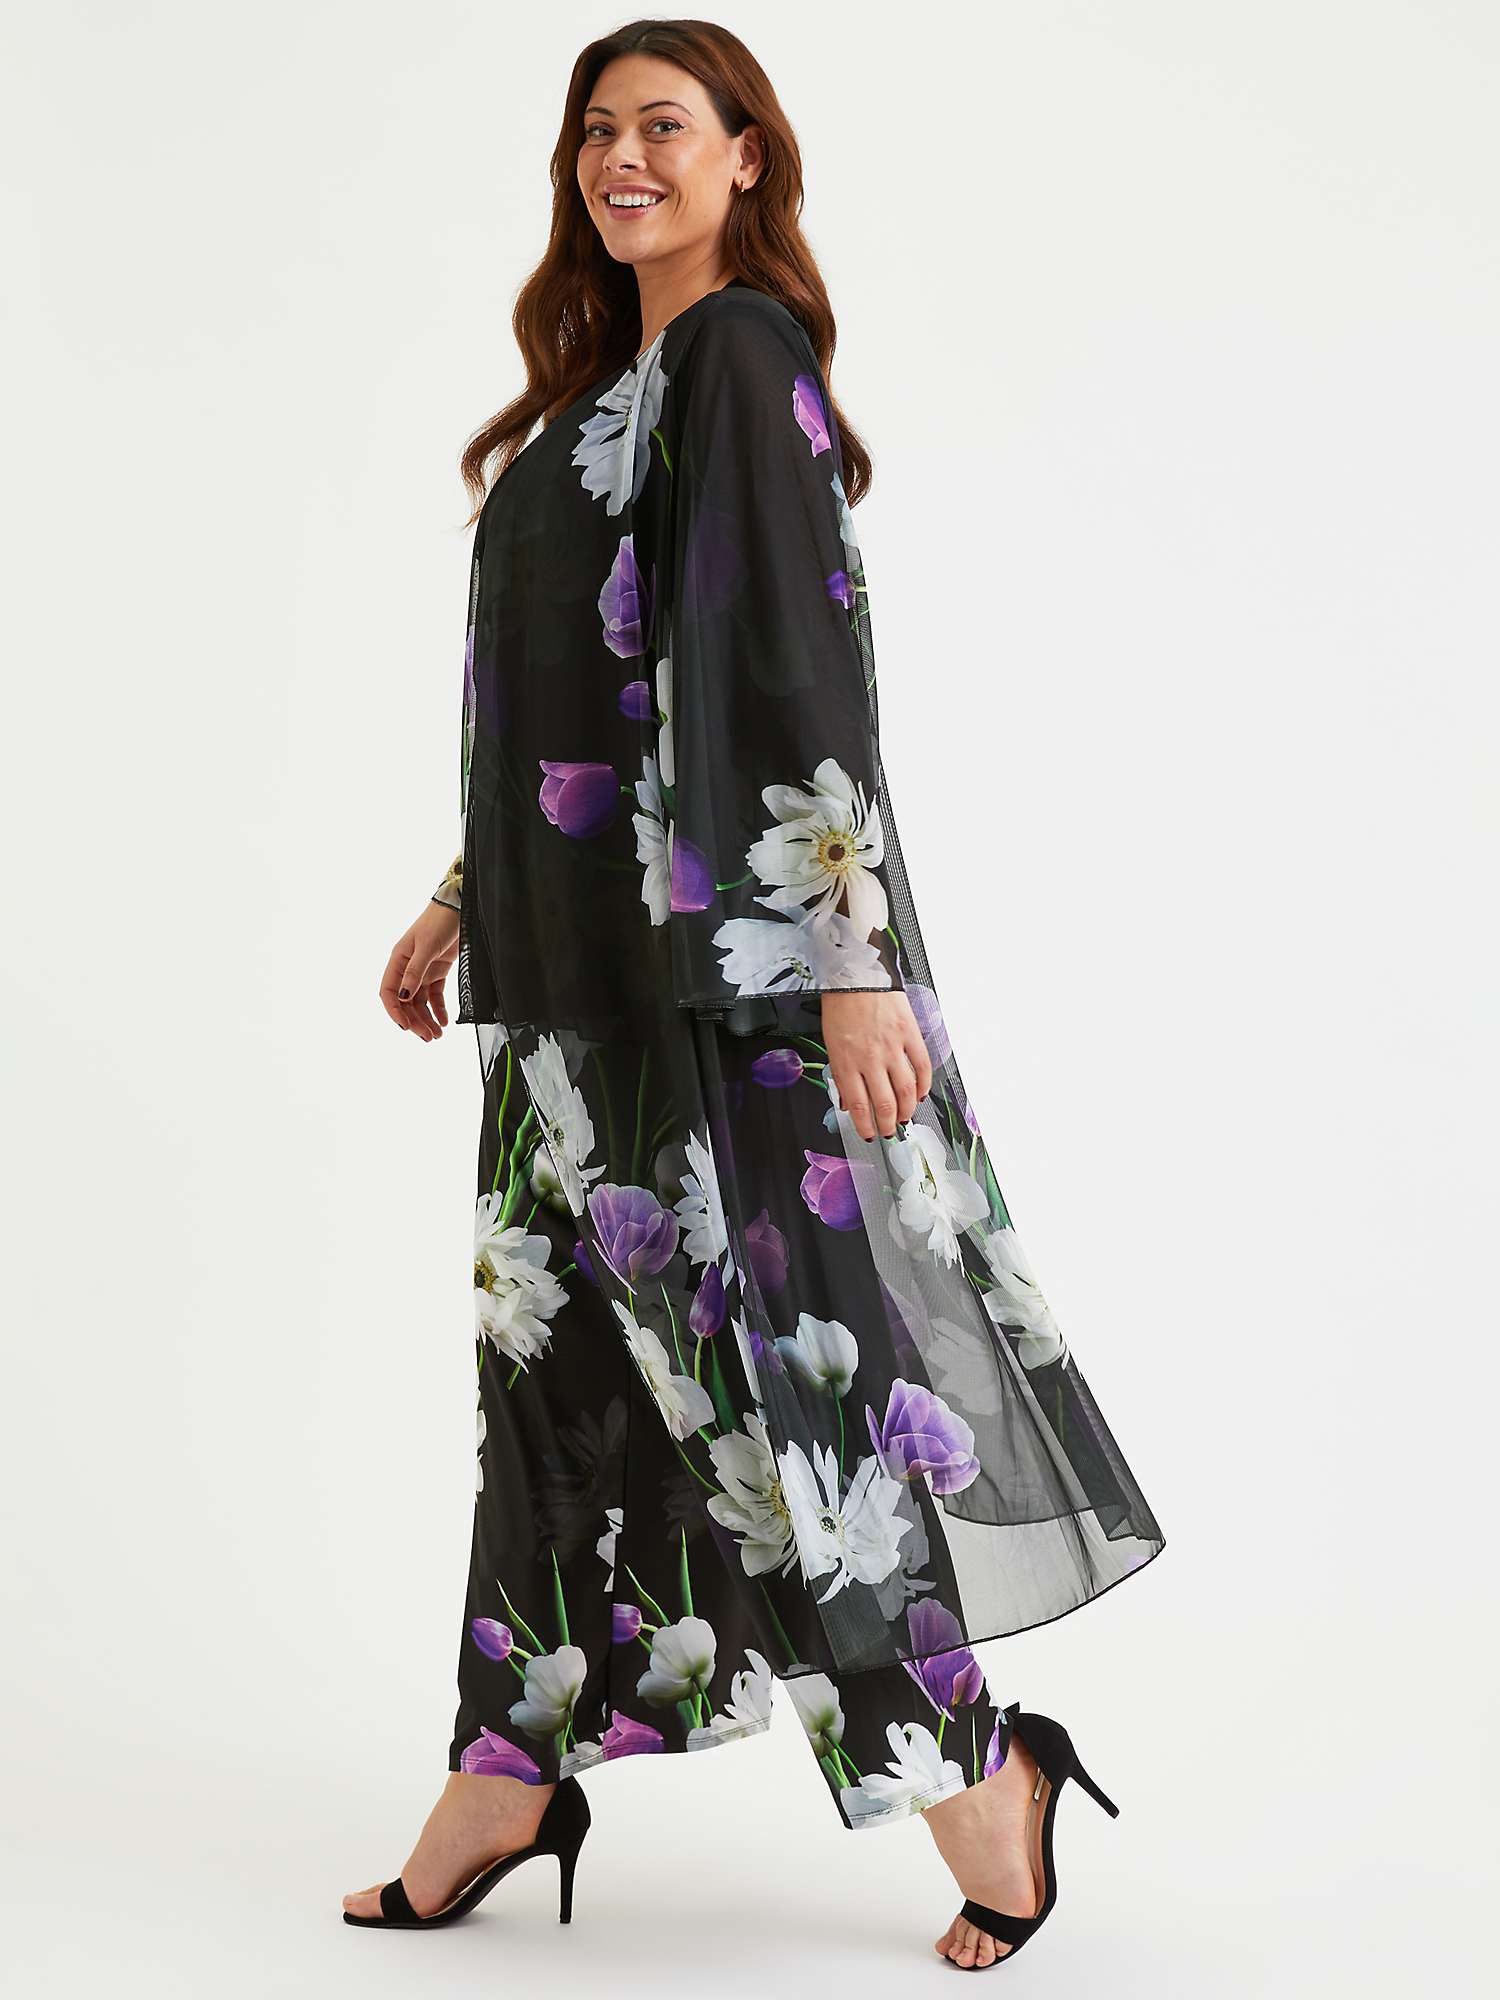 Buy Scarlett & Jo Floral Print Waterfall Neck Kimono, Black/Purple Online at johnlewis.com